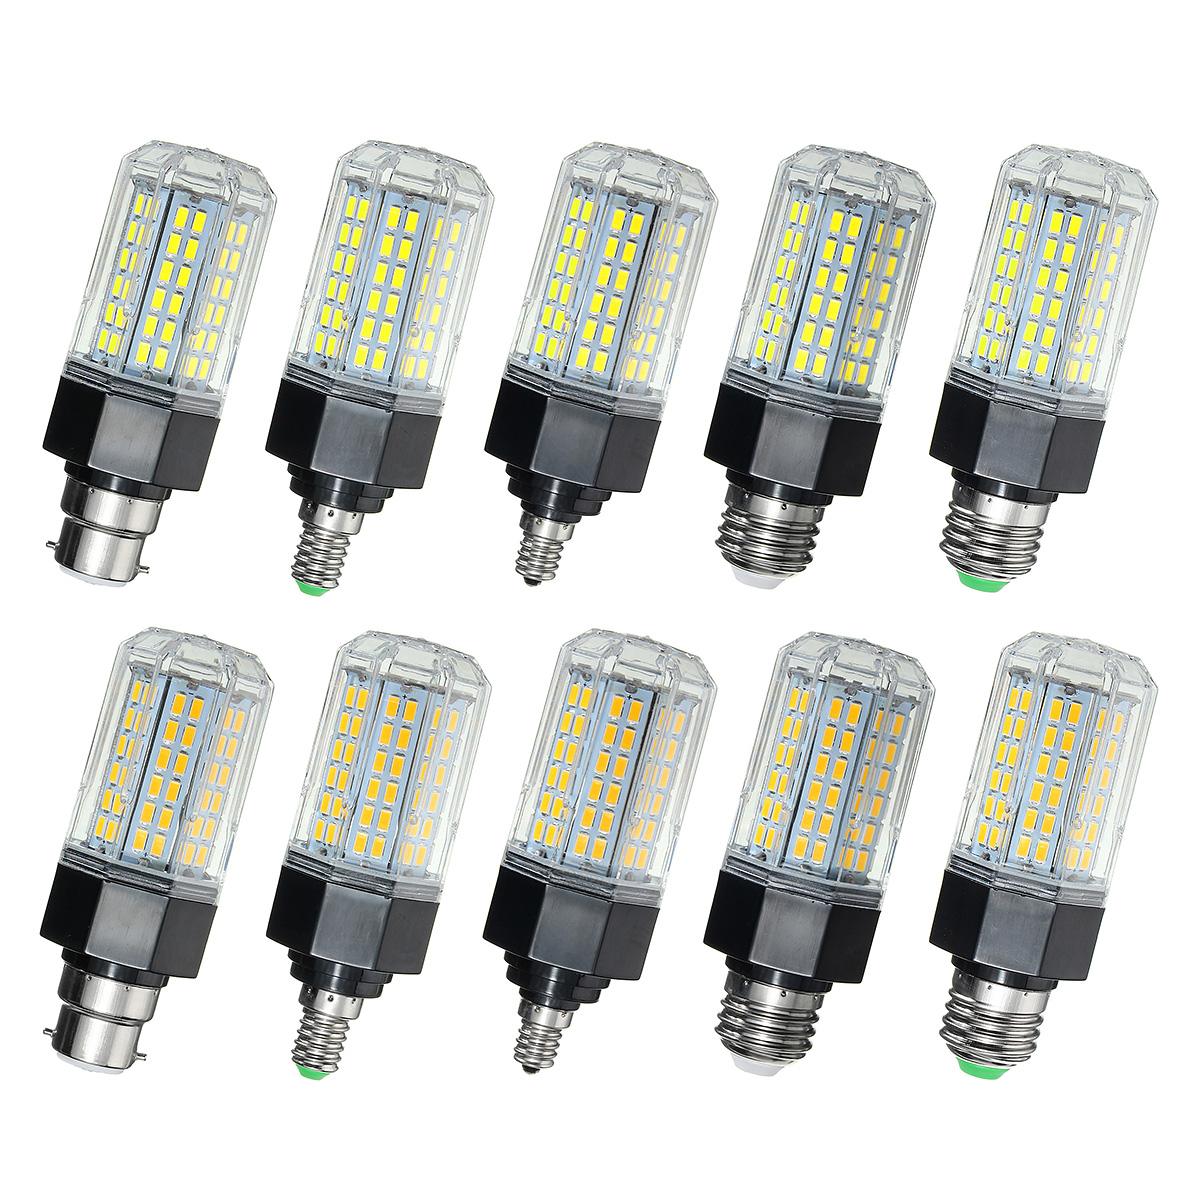 Dimmable-E27-E14-B22-E26-E12-10W-SMD5730-LED-Corn-Light-Lamp-Bulb-AC110-265V-1141537-2